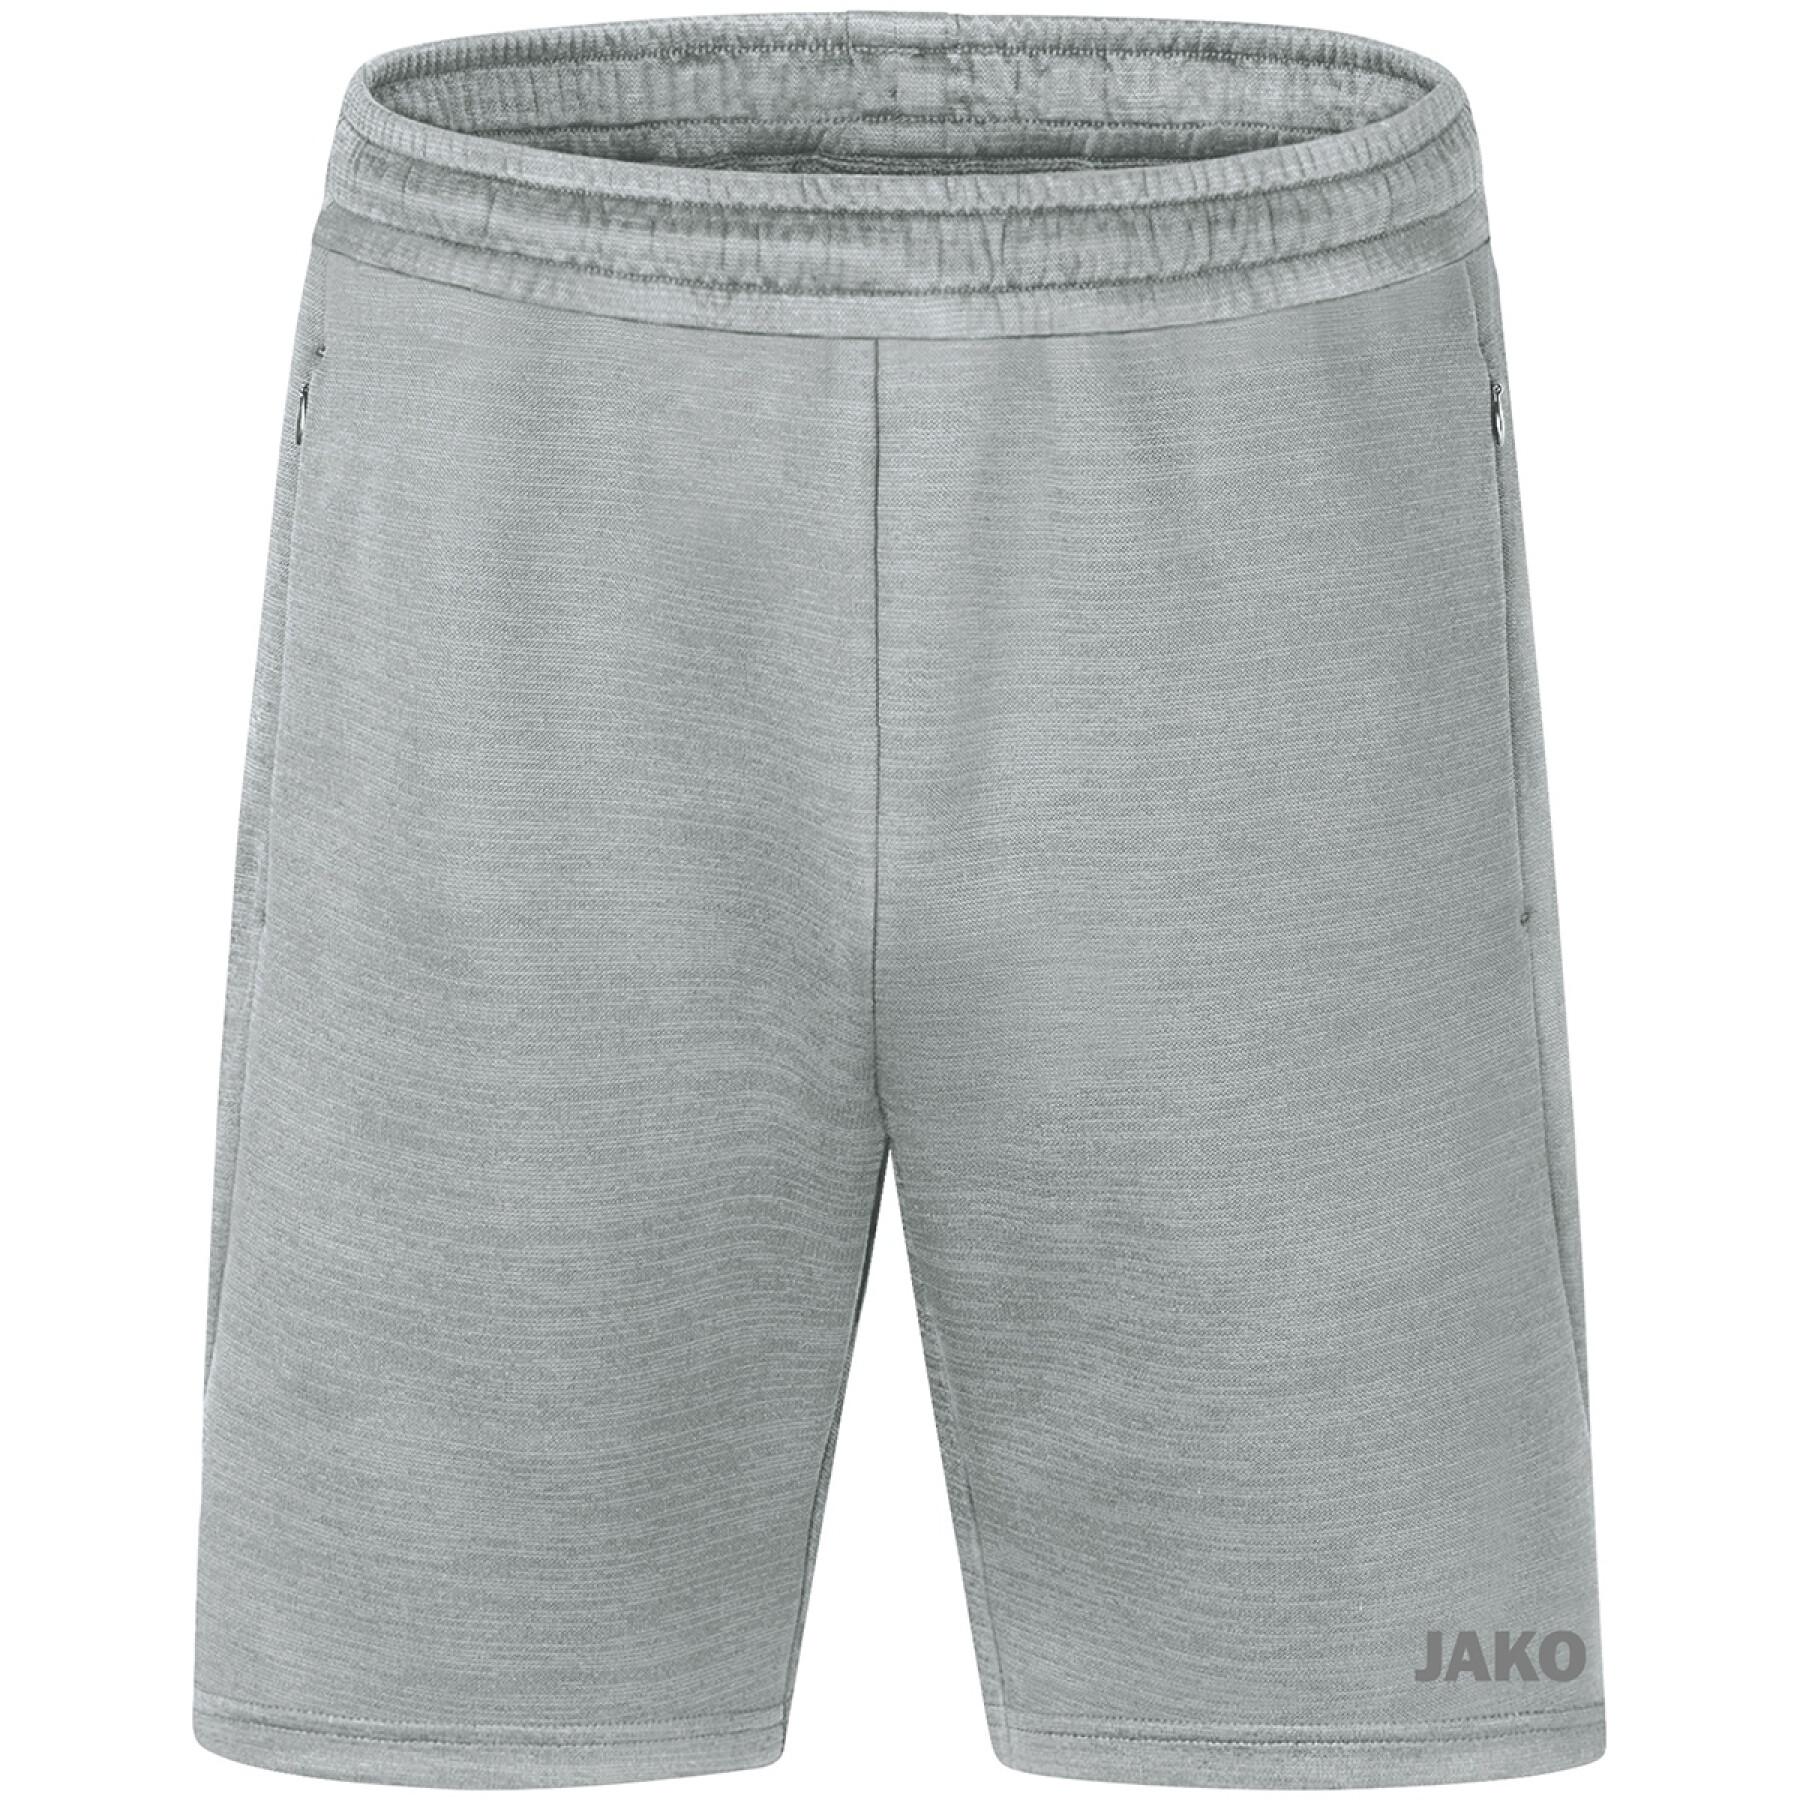 Junior shorts Jako Challenge